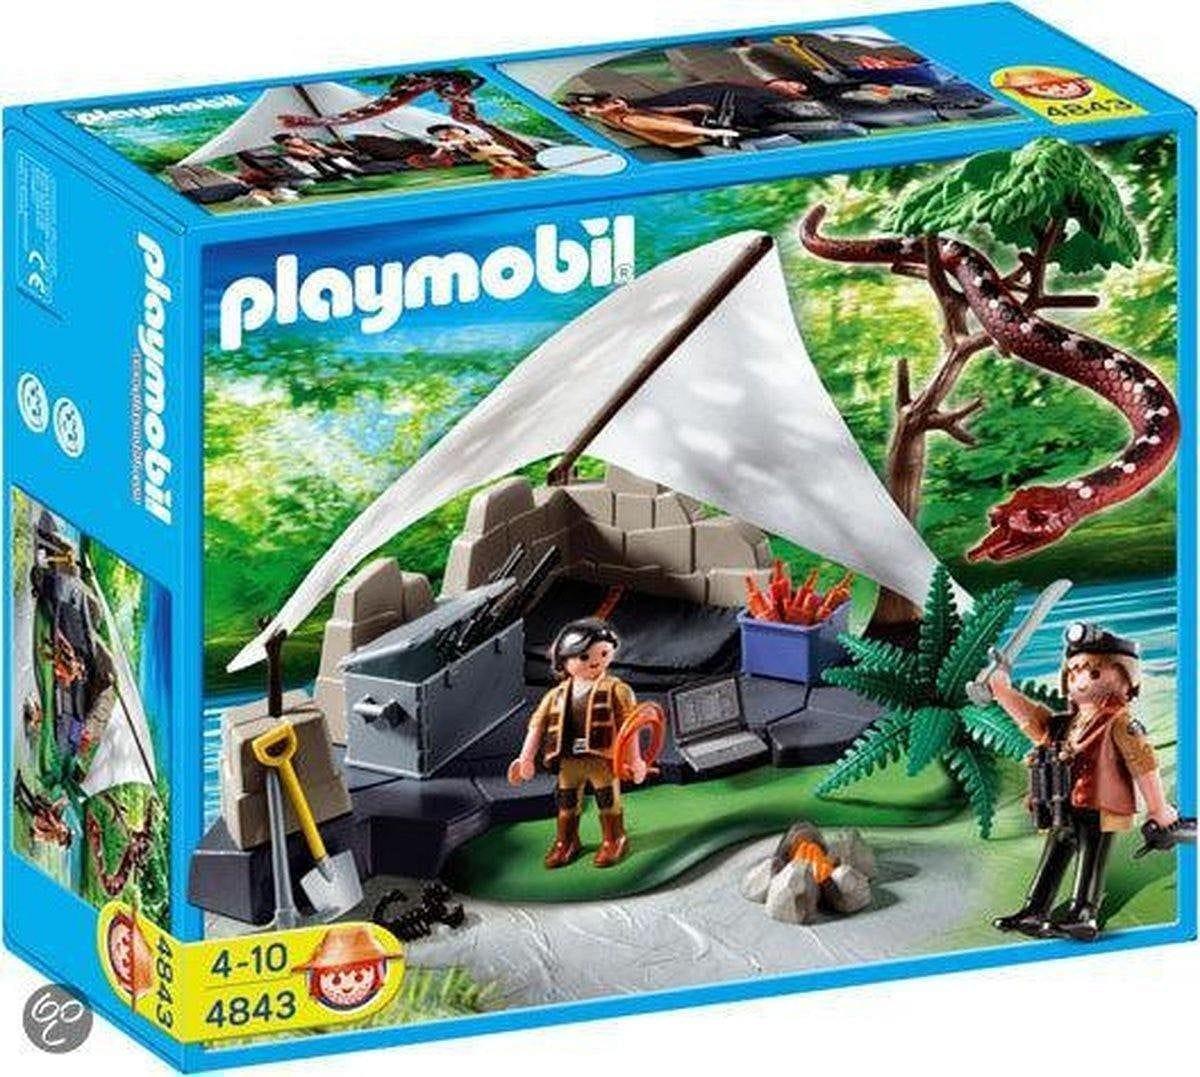 Playmobil Uitvalsbasis Van De Schattenjagers 4843 Special Plus PLAYMOBIL @ 2TTOYS PLAYMOBIL €. 16.99